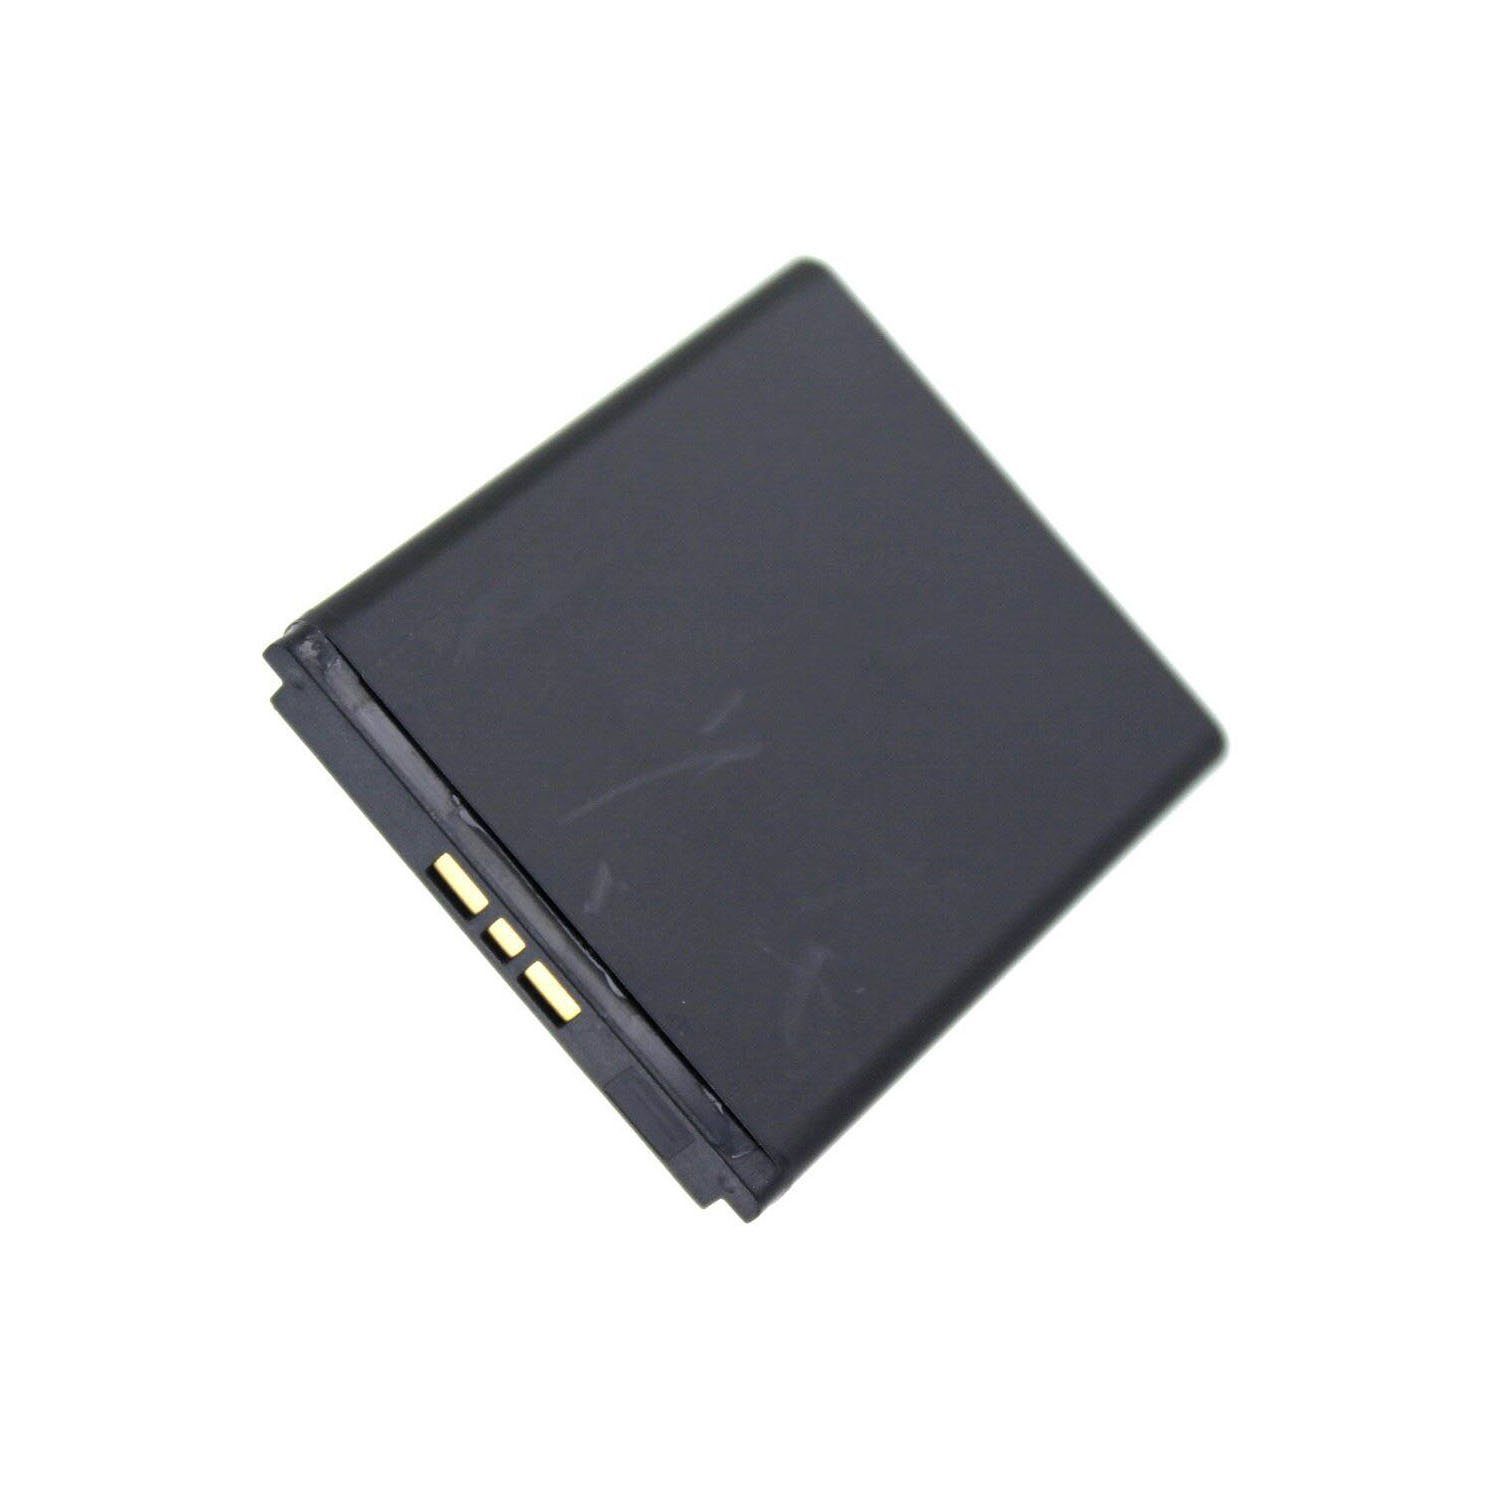 AGI Akku kompatibel mit Sony Ericsson AAD-3880020-BV Akku Akku